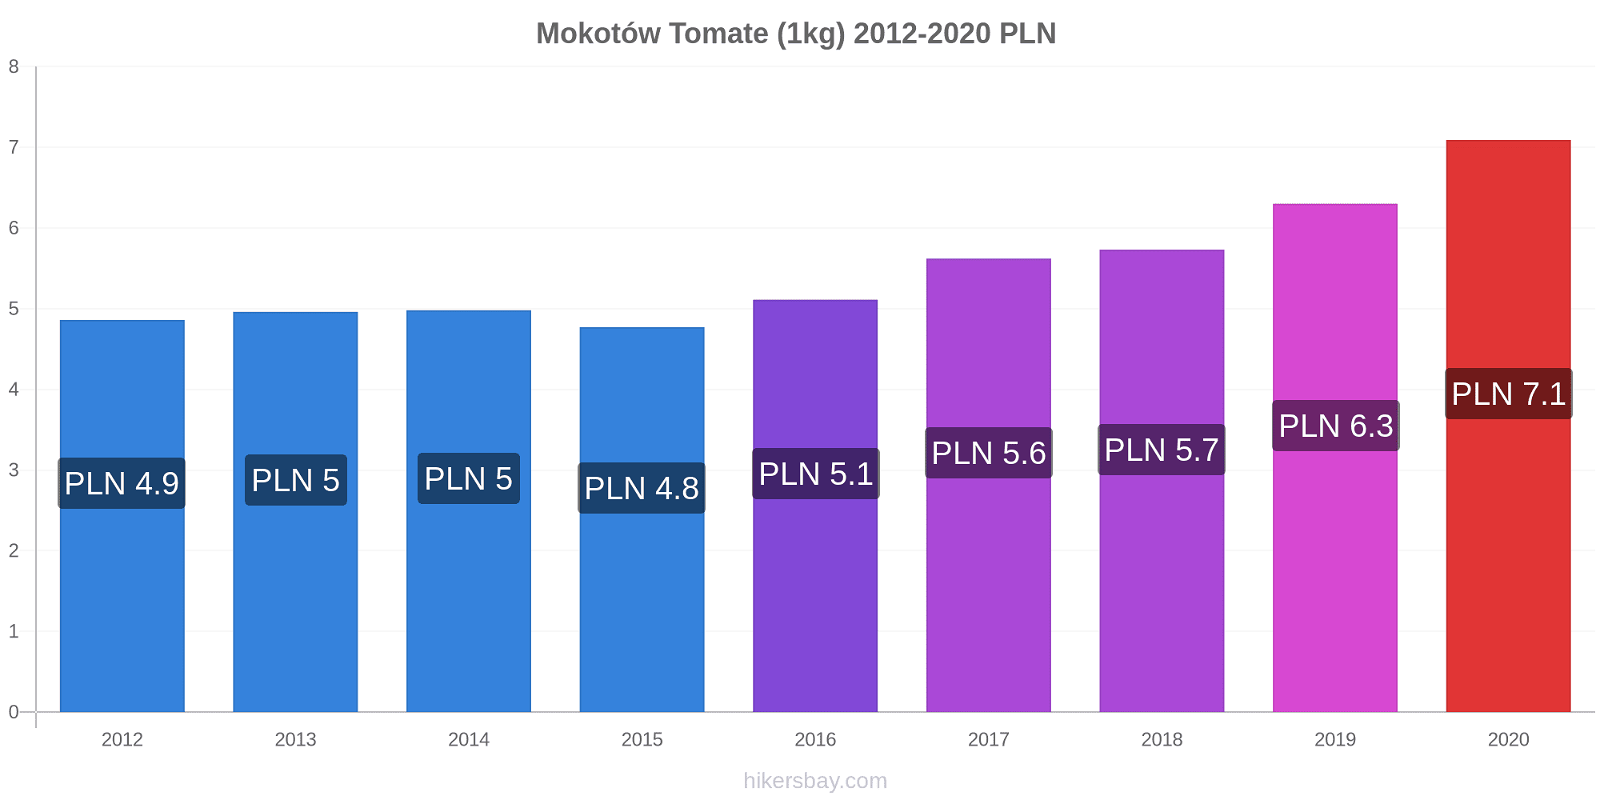 Mokotów changements de prix Tomate (1kg) hikersbay.com